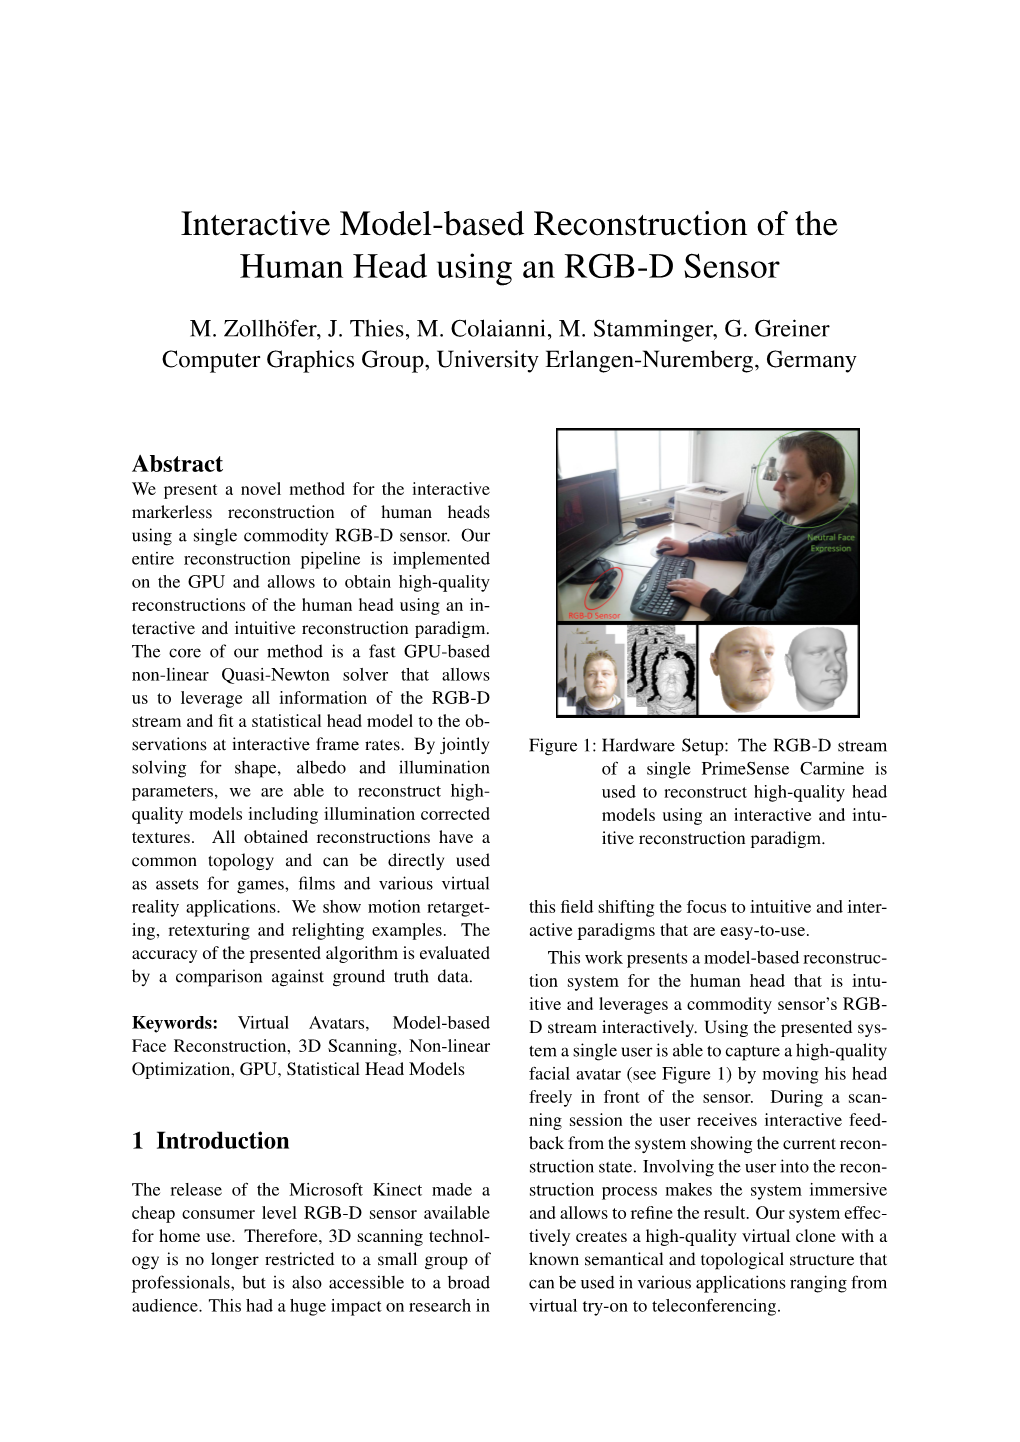 Interactive Model-Based Reconstruction of the Human Head Using an RGB-D Sensor